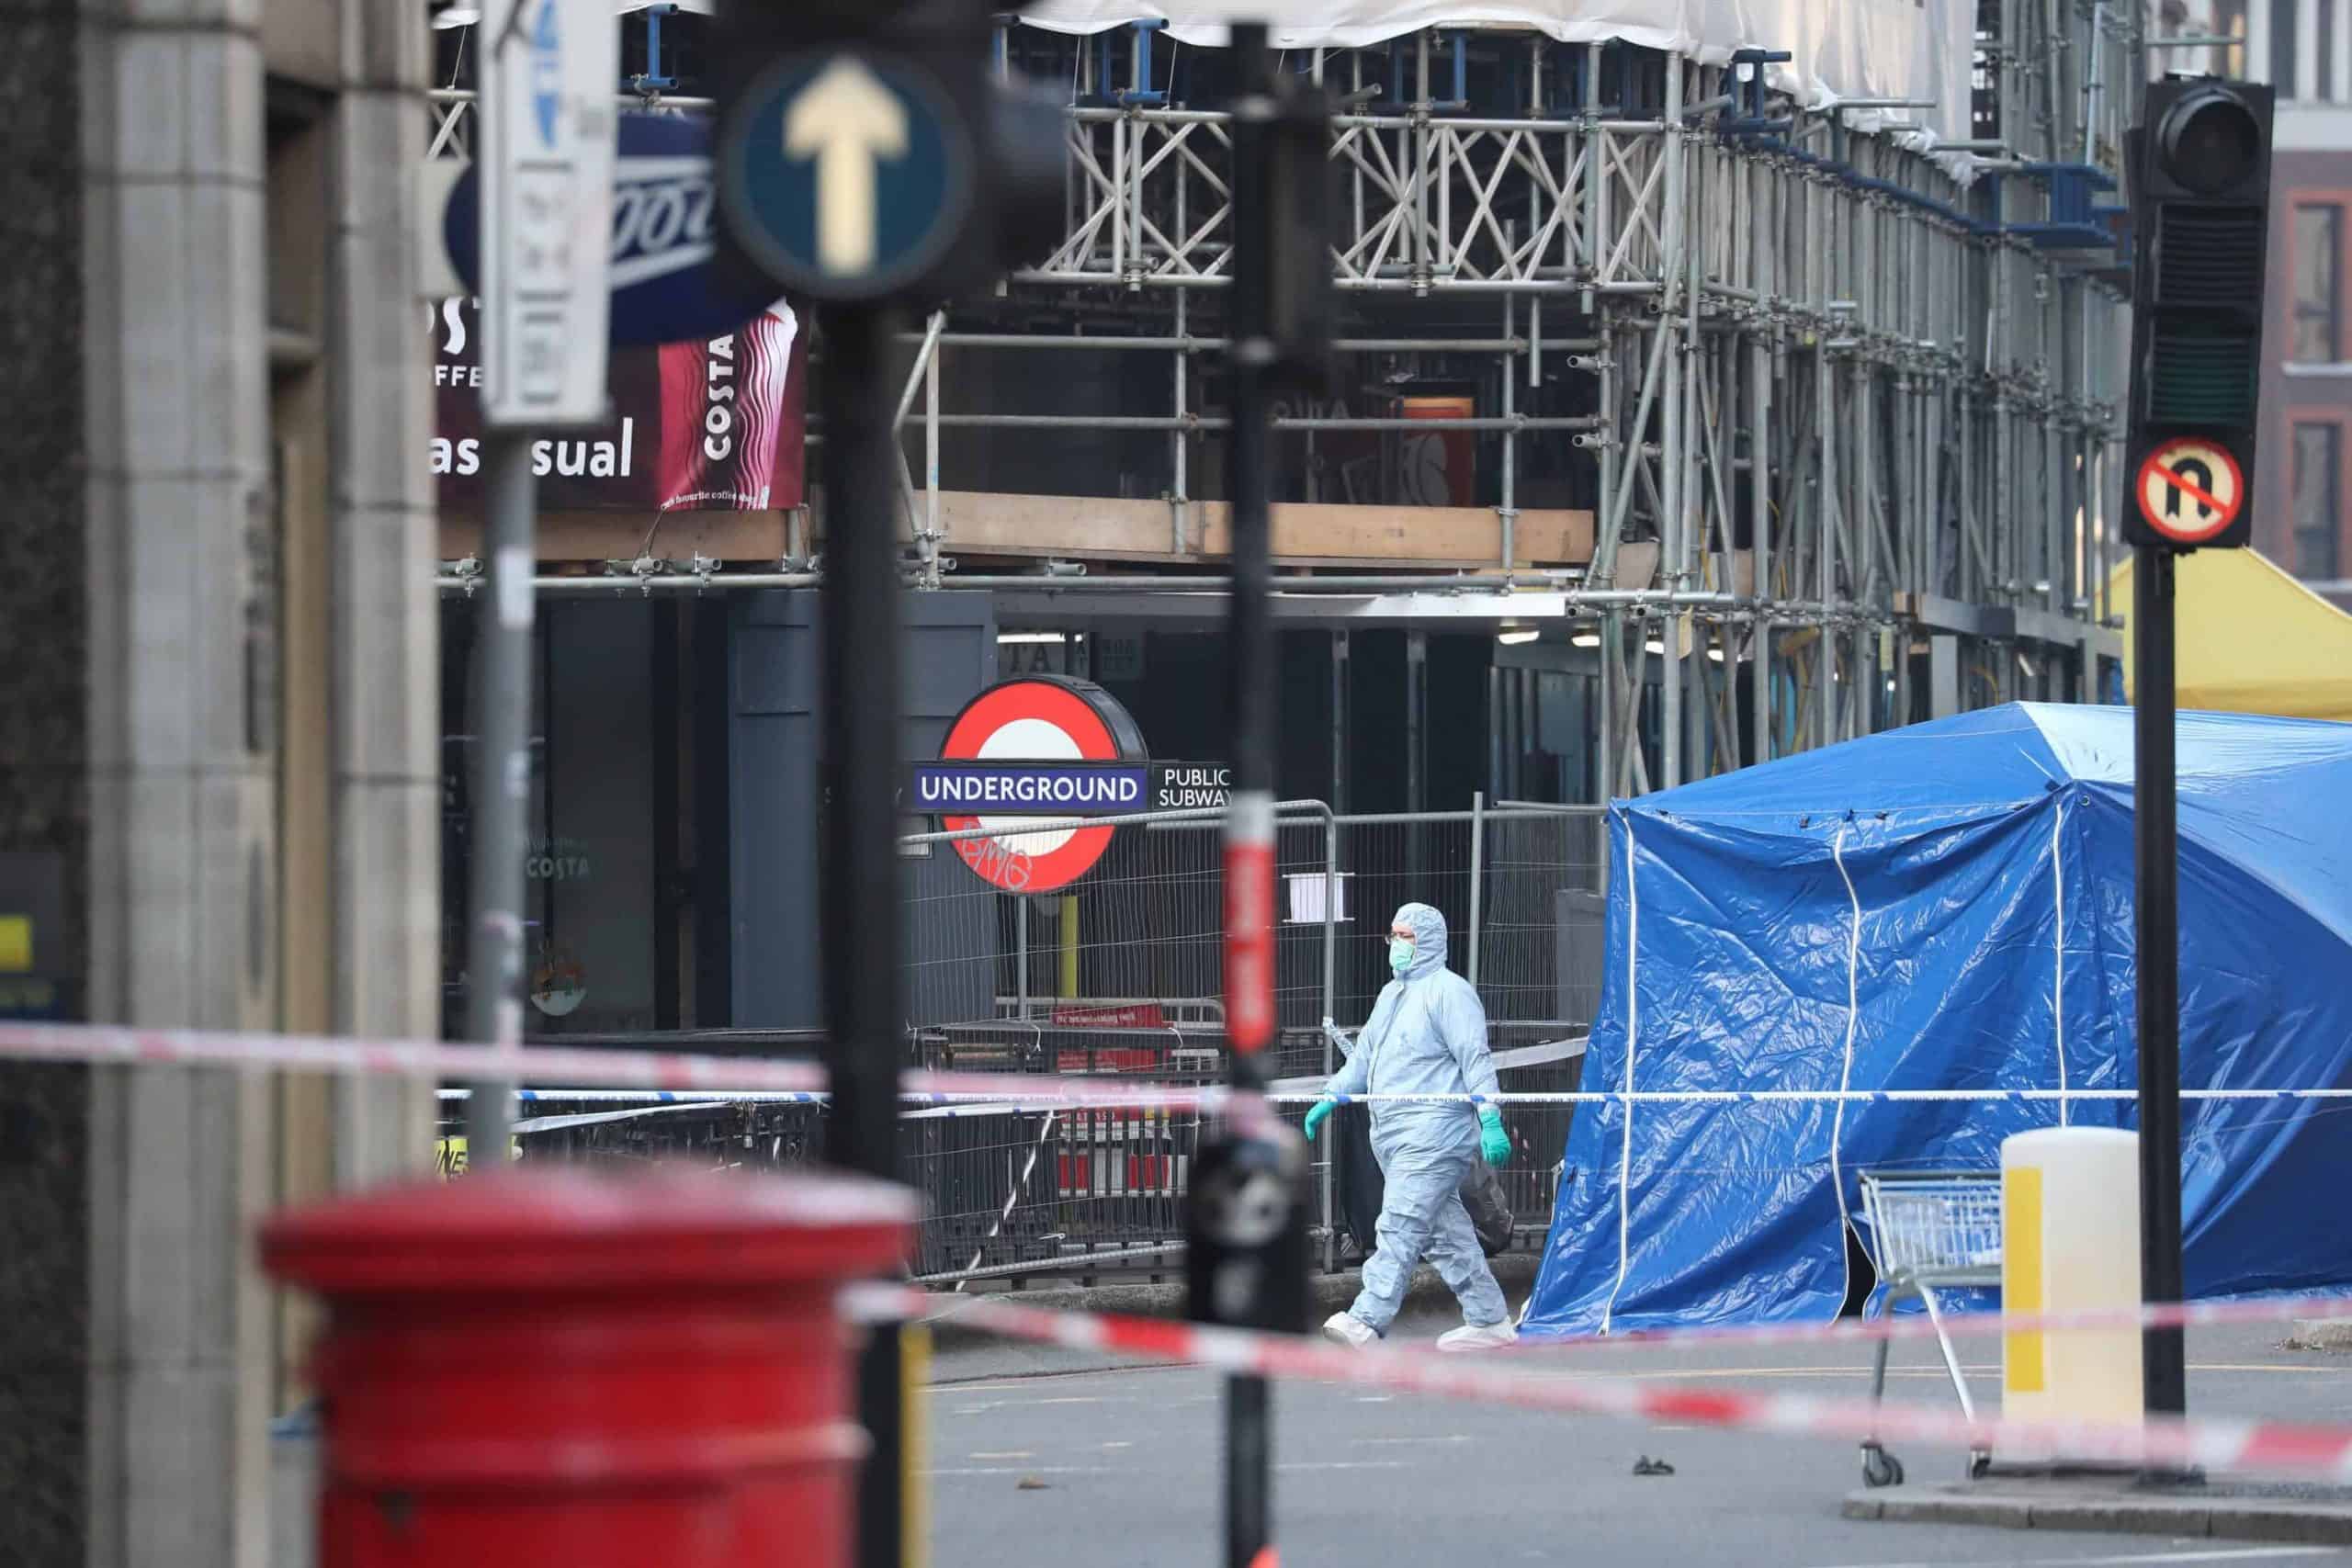 Why was London Bridge attacker Usman Khan released?